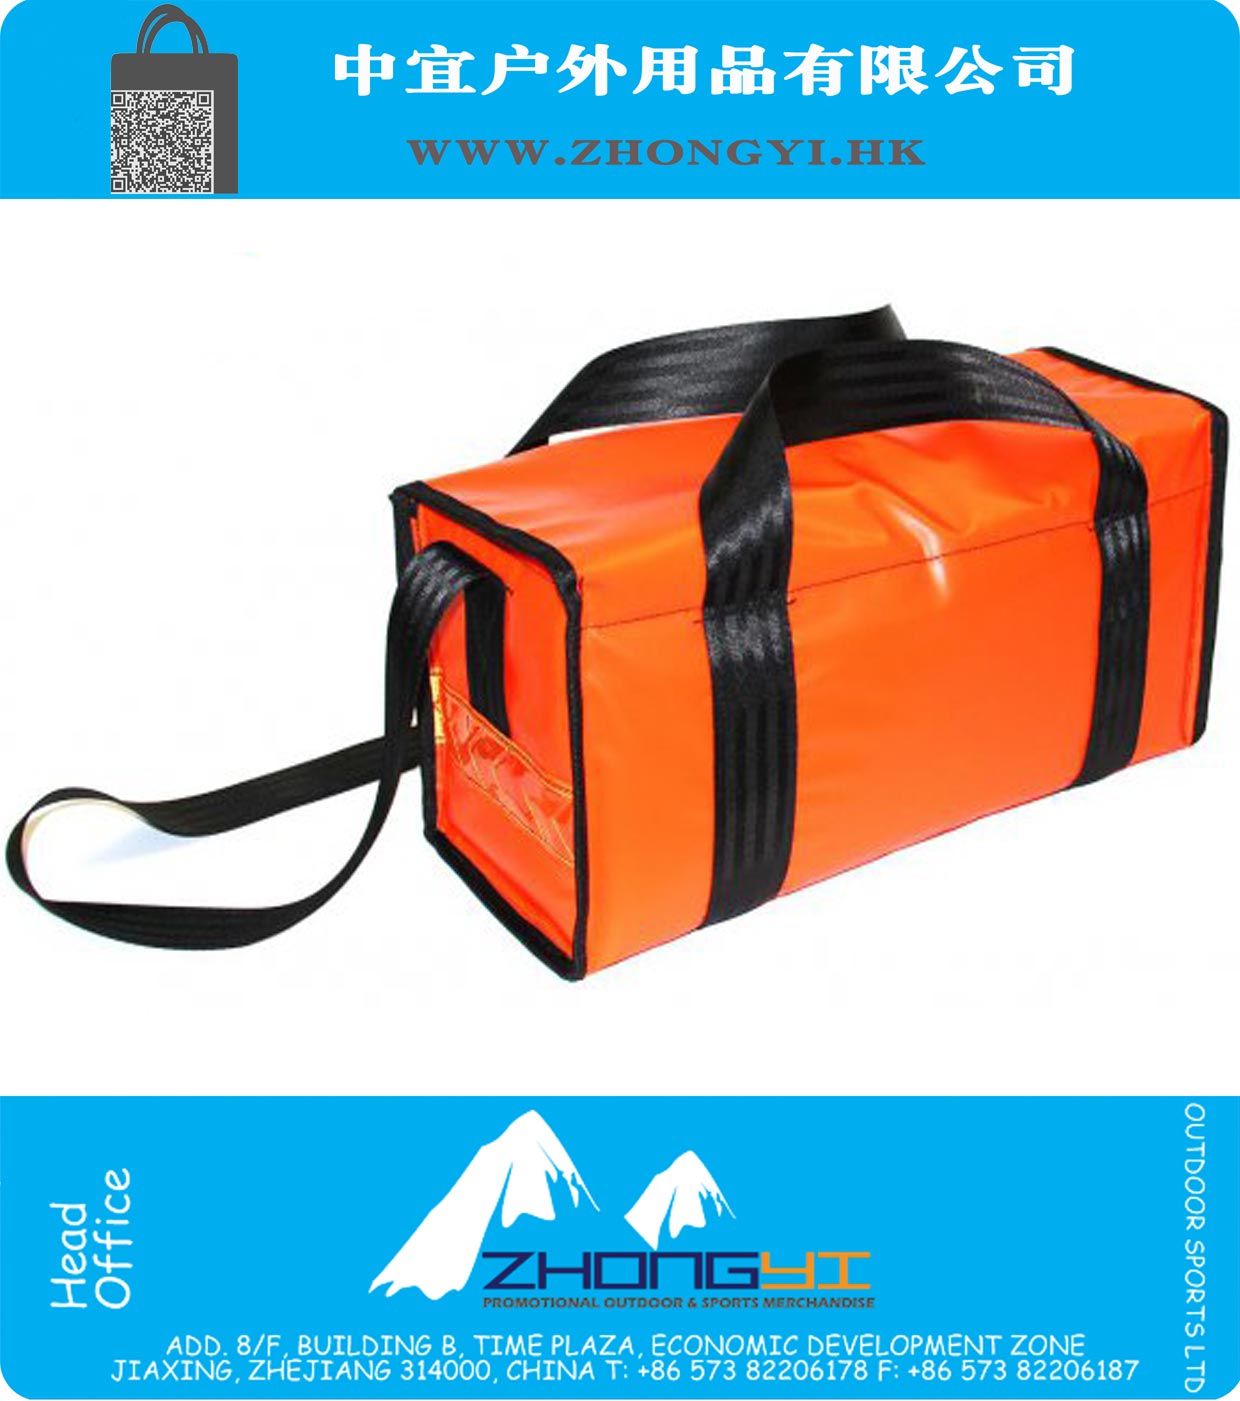 PVC High Visibility Rescue Emergency Tool Bag